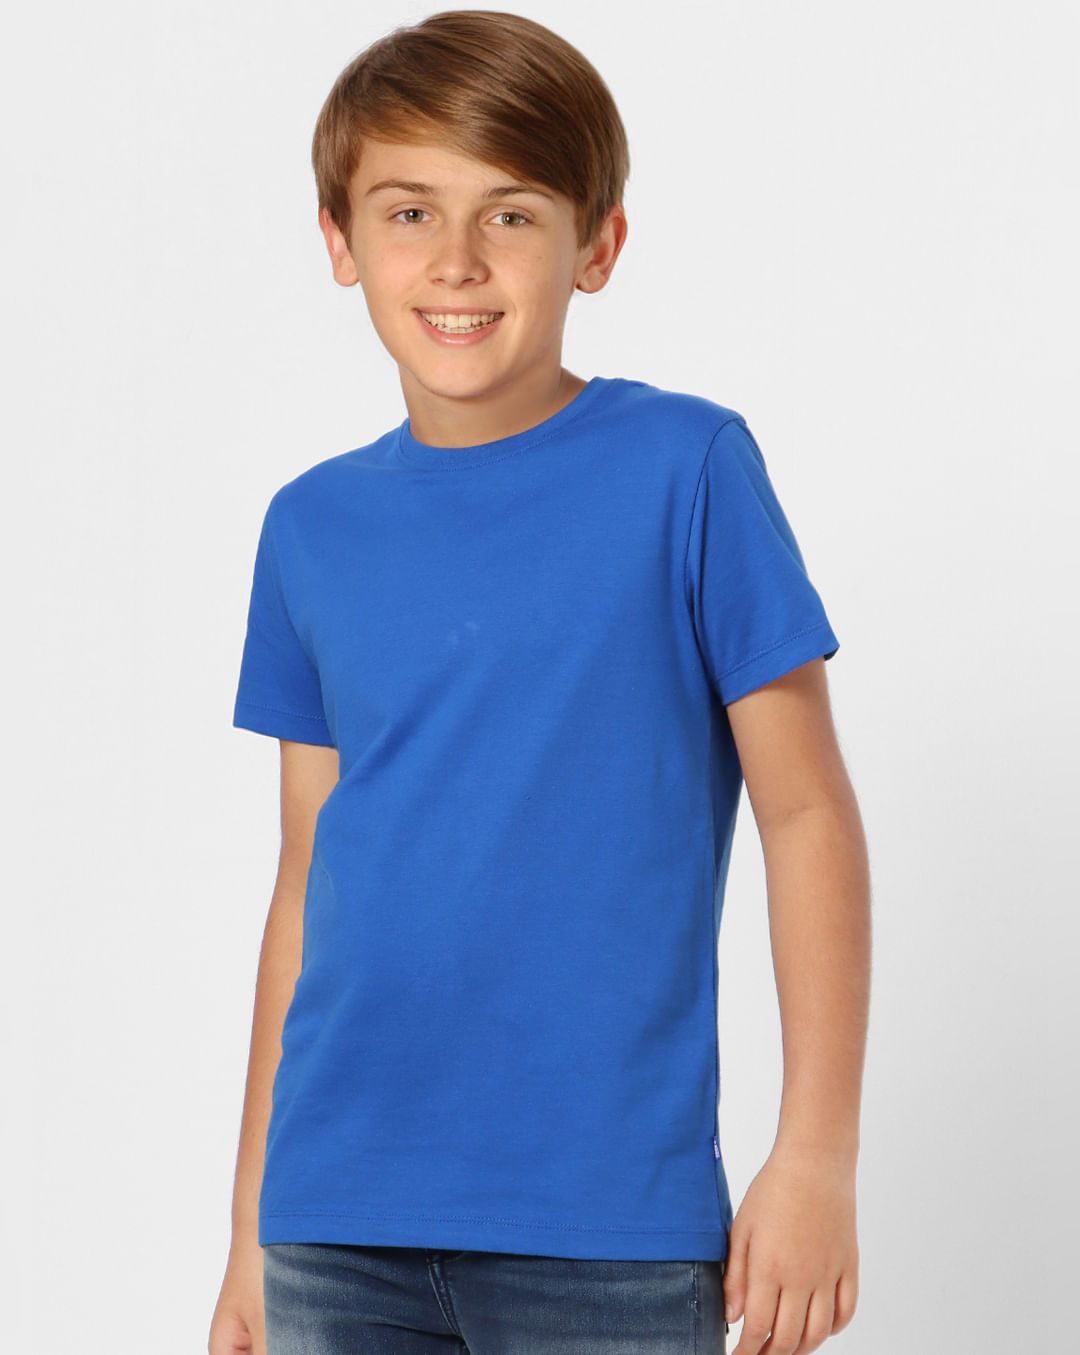 Buy Blue Crew Neck T-shirt for Boys Online at Jack&Jones Junior |254954607